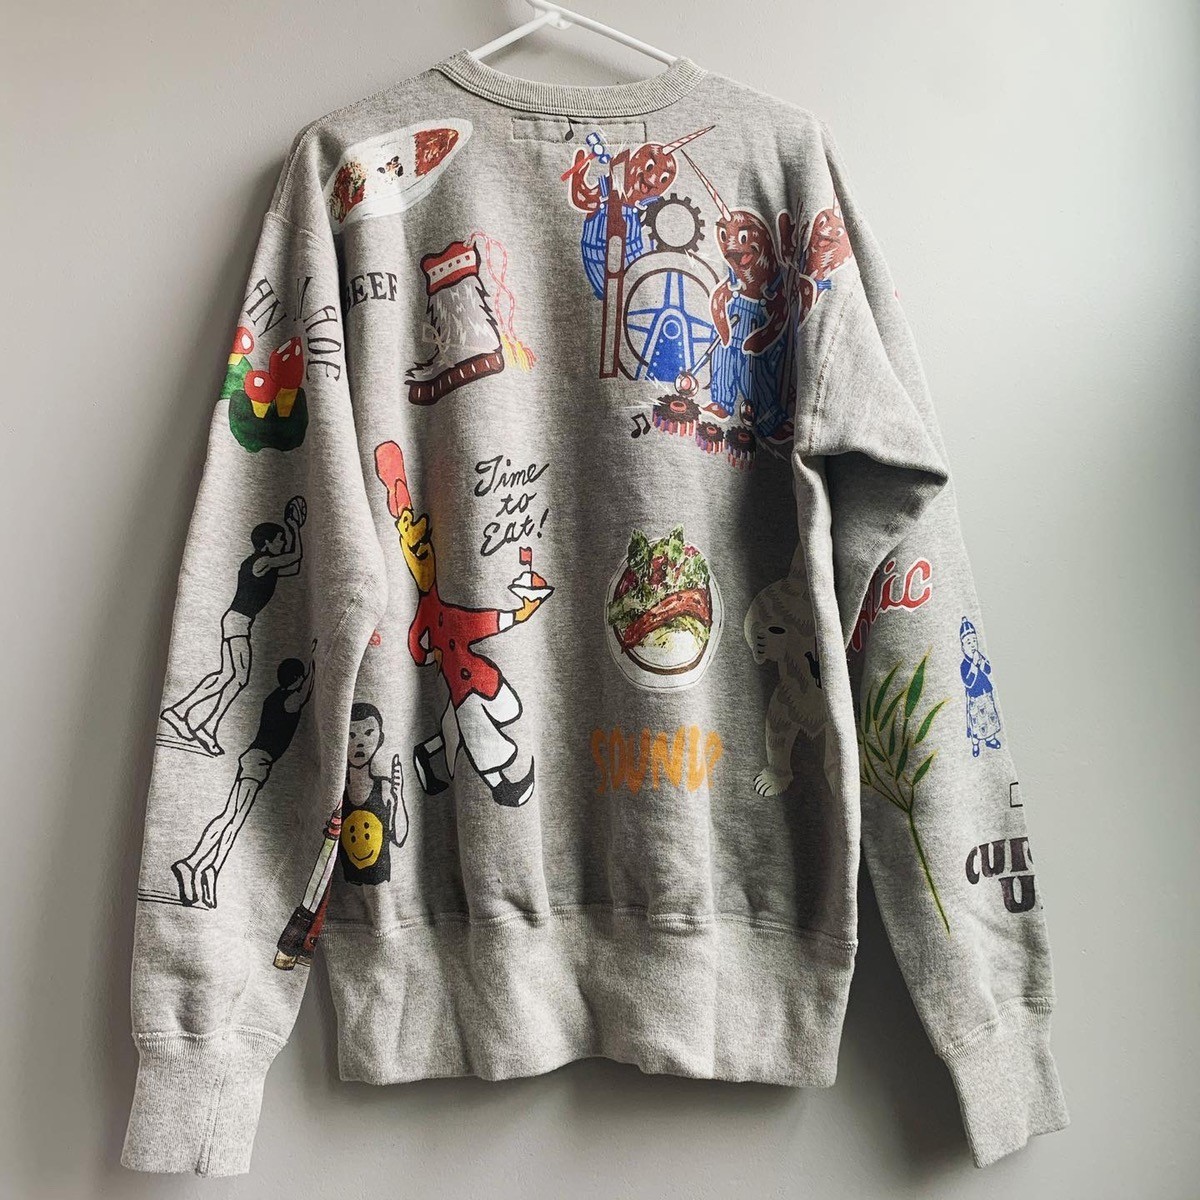 CPFM x “Archive” Crewneck Sweatshirt Size L / 3 - 2